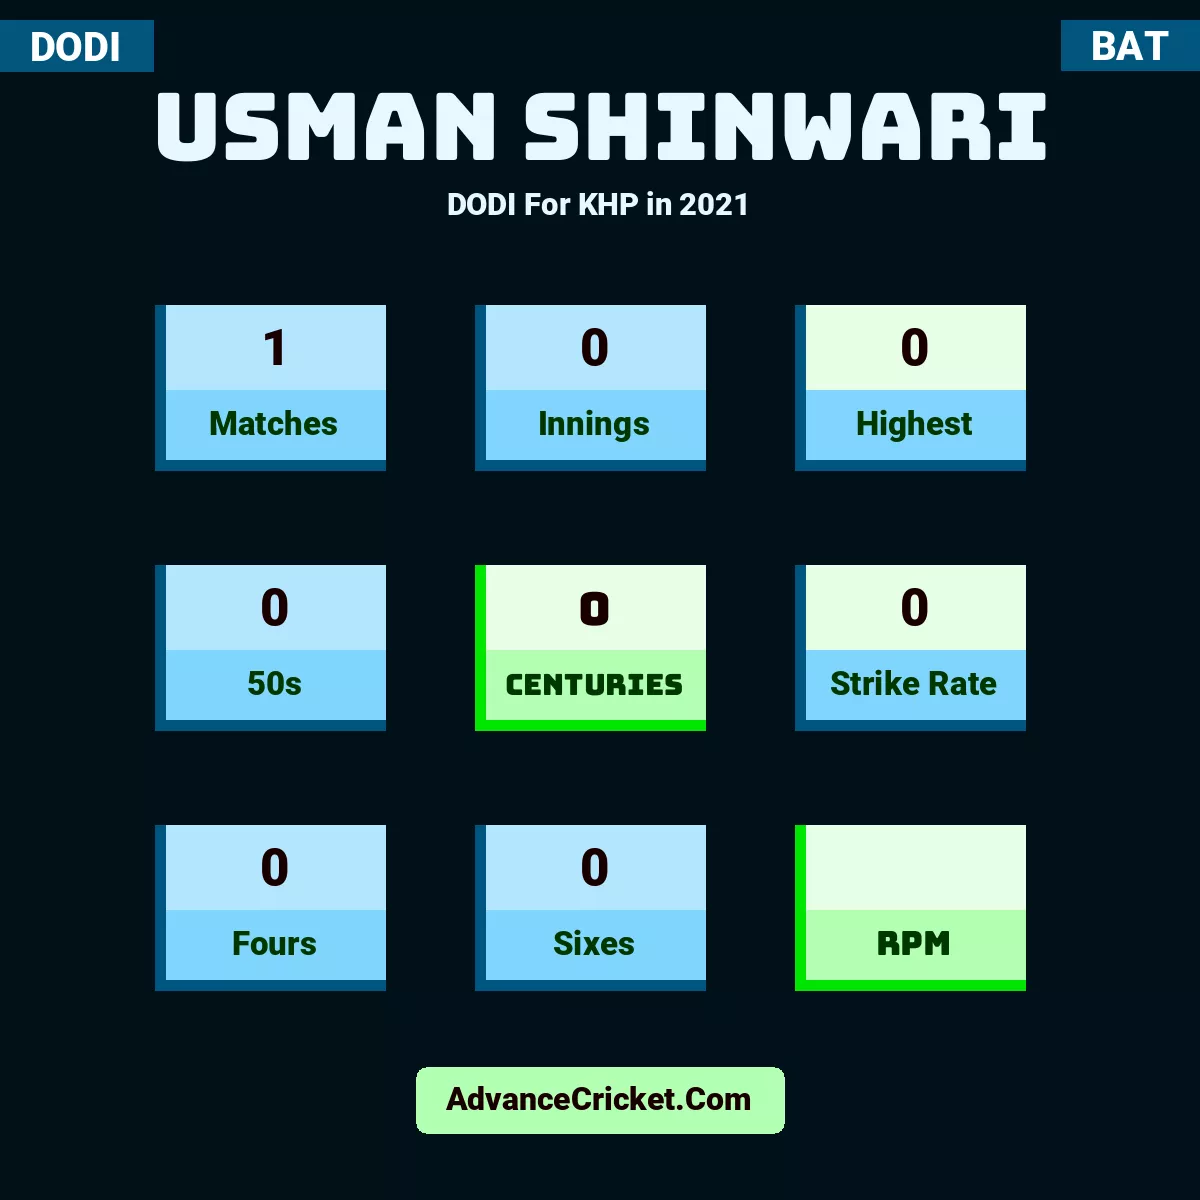 Usman Shinwari DODI  For KHP in 2021, Usman Shinwari played 1 matches, scored 0 runs as highest, 0 half-centuries, and 0 centuries, with a strike rate of 0. U.Shinwari hit 0 fours and 0 sixes.